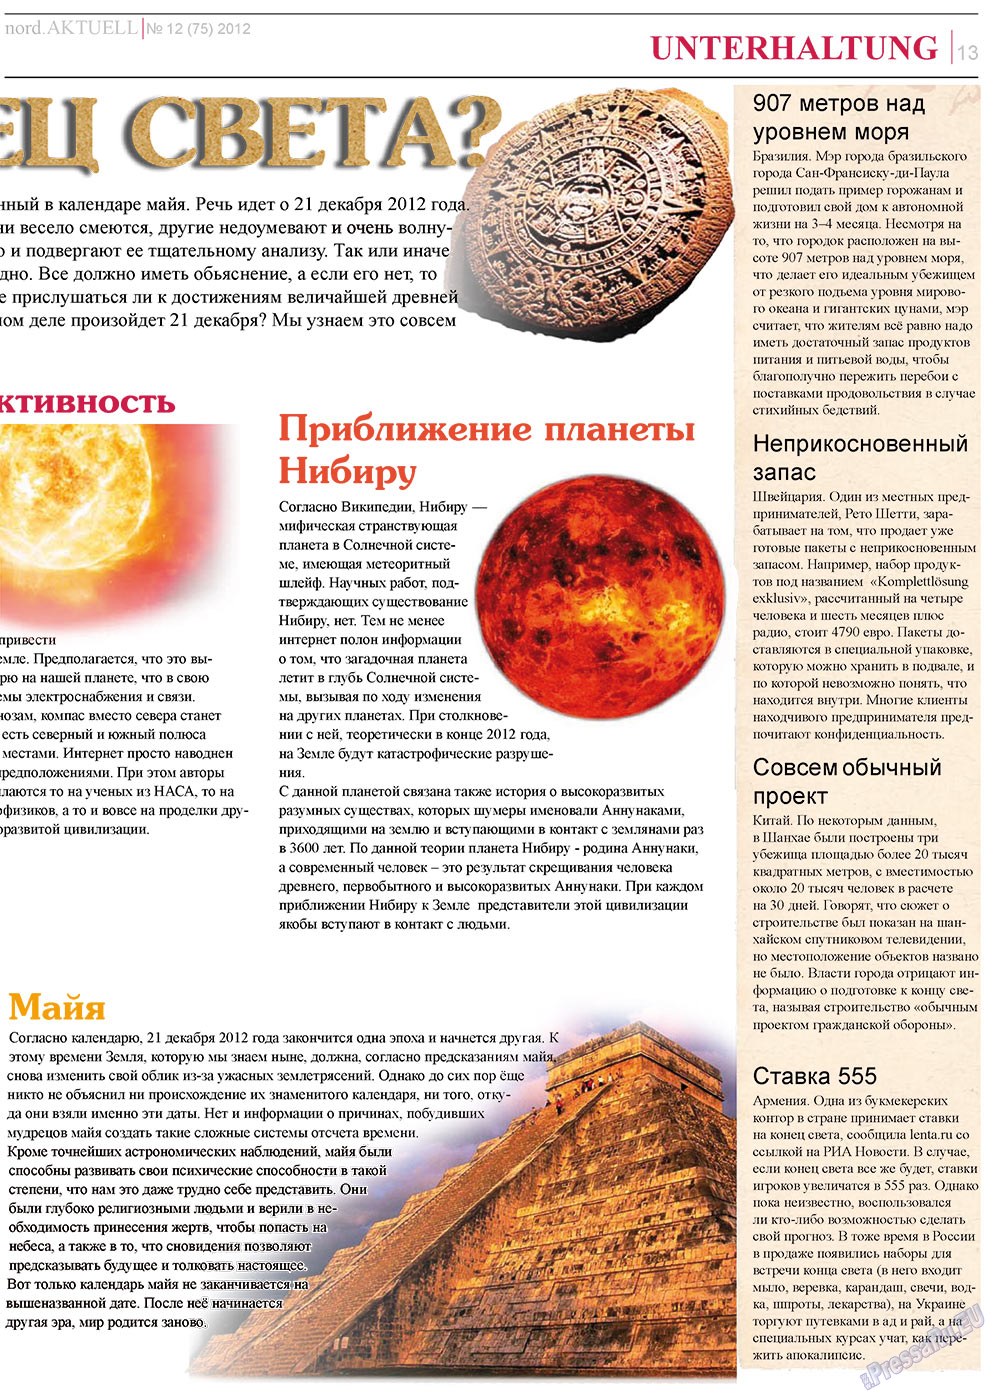 nord.Aktuell, газета. 2012 №12 стр.13